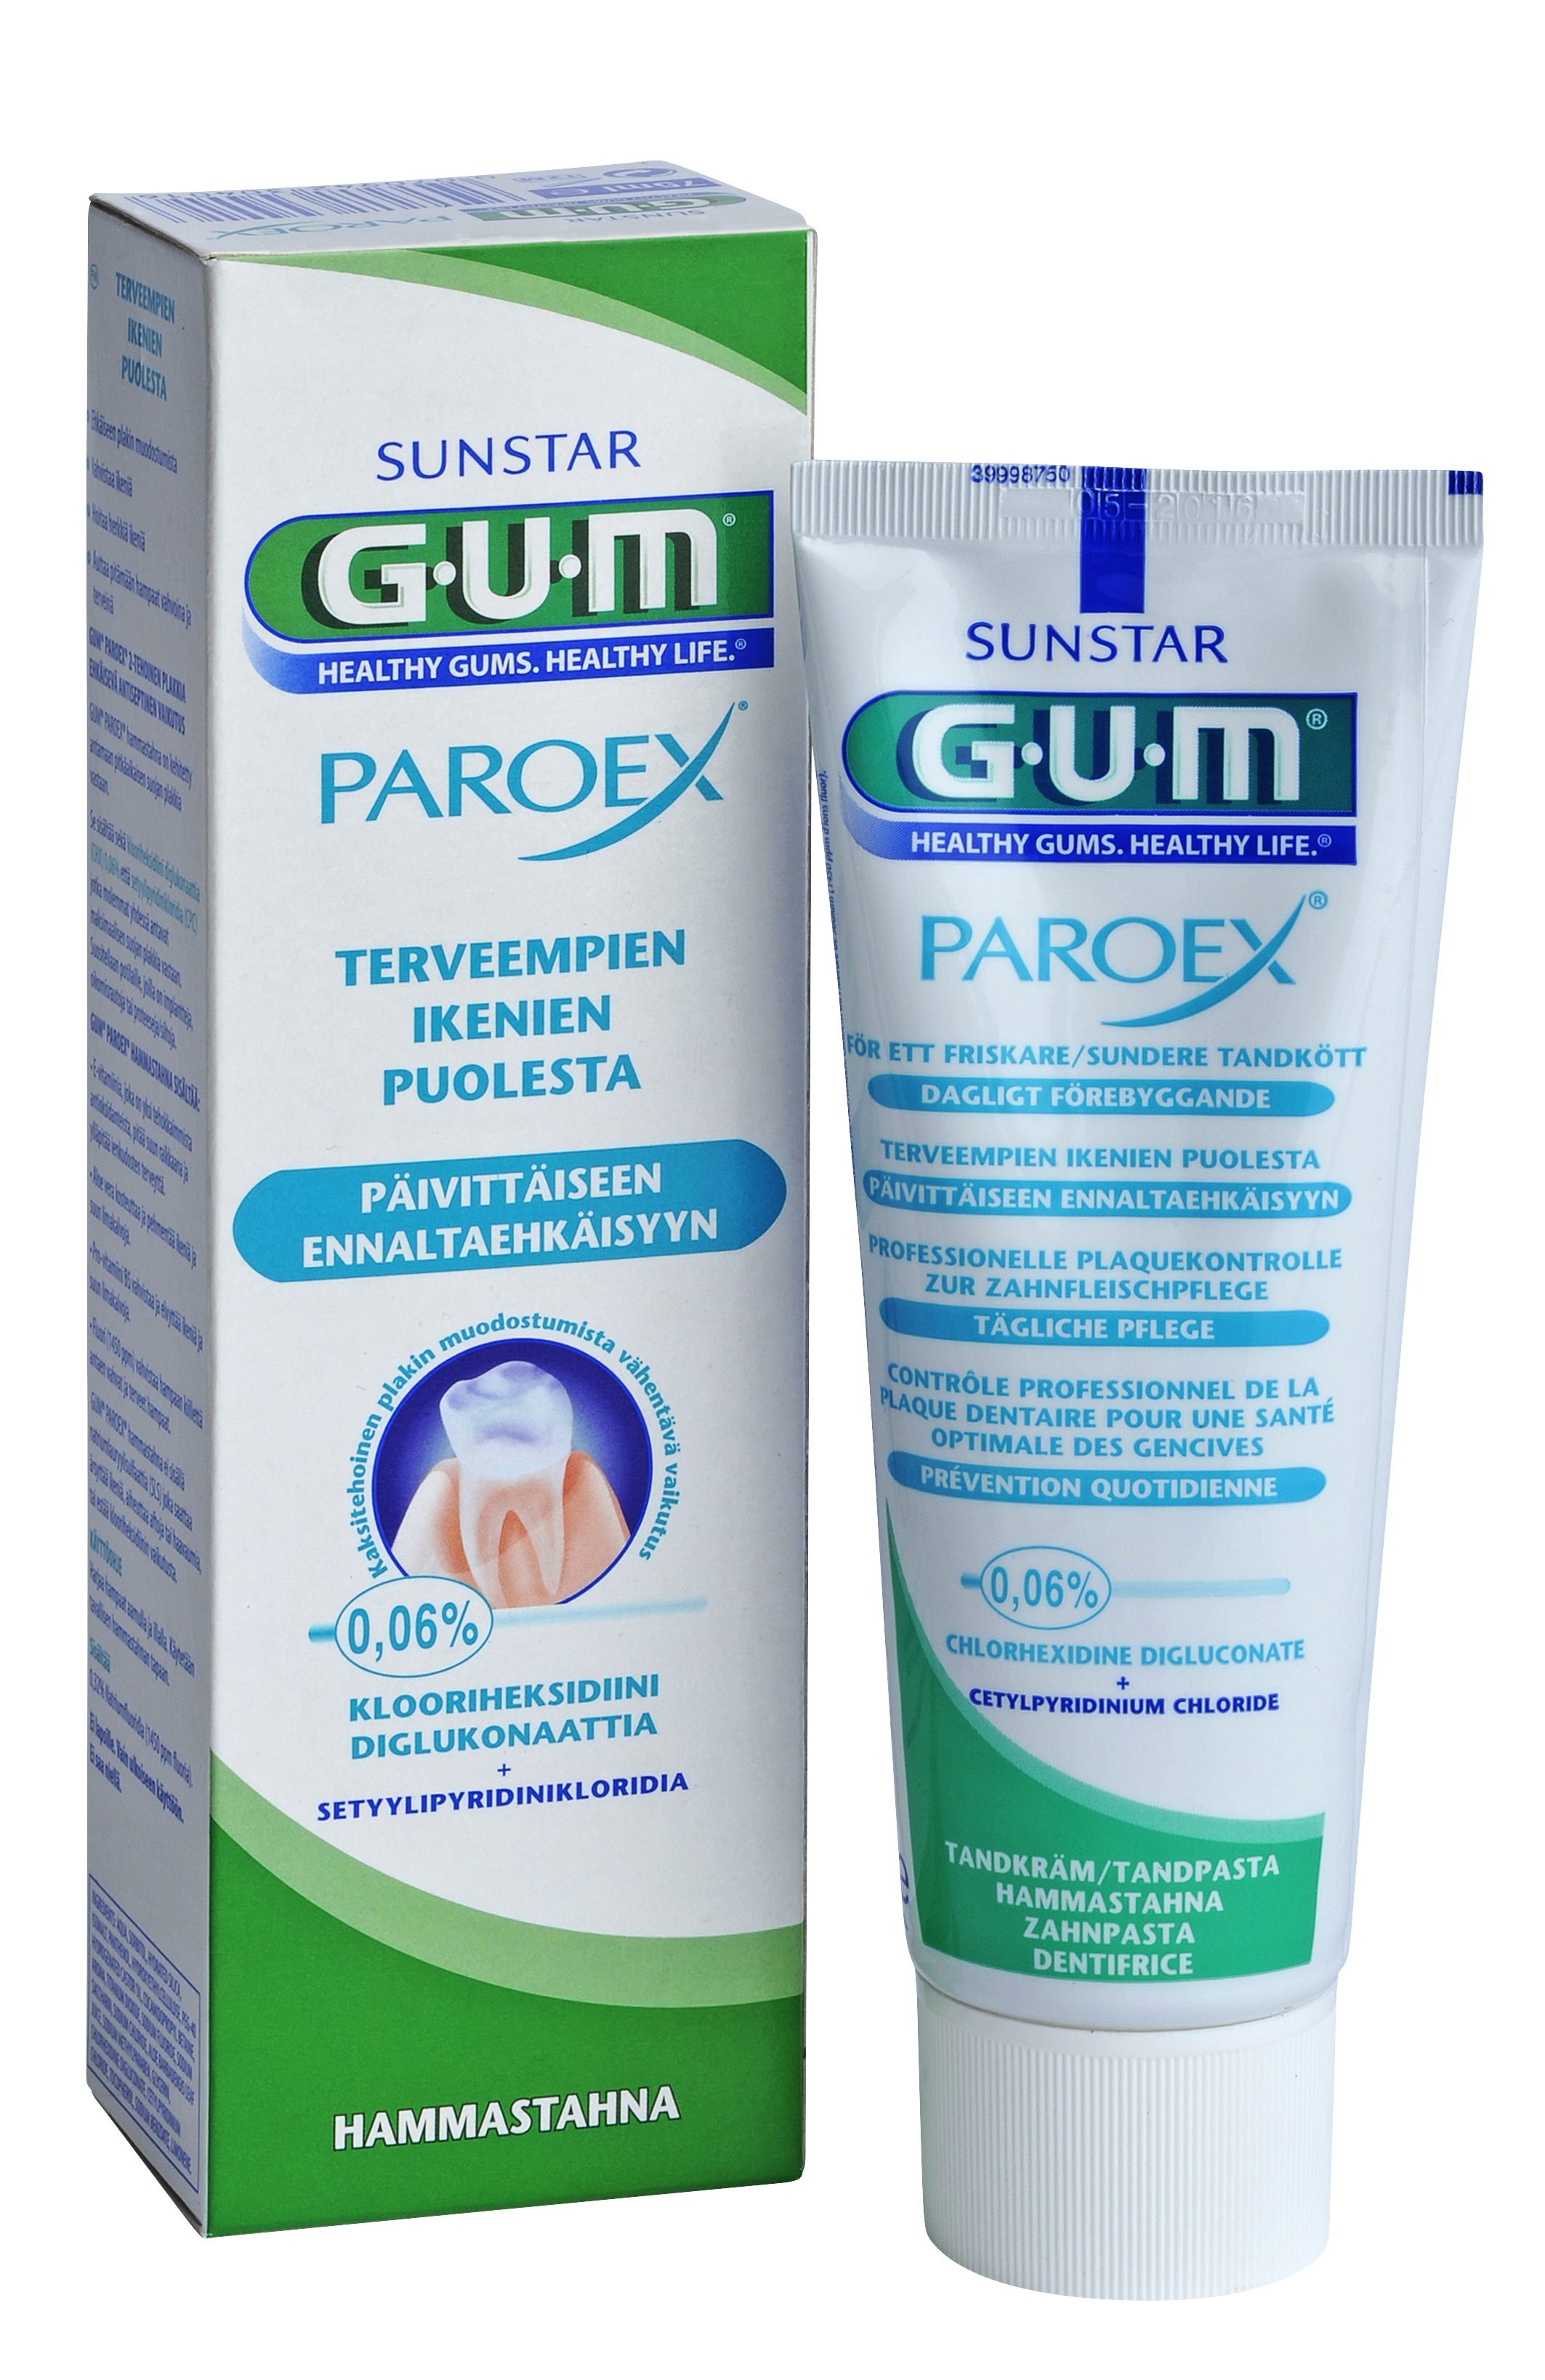 1750-FI-GUM-Paroex-006-Toothpaste-75ml-Box-Tube